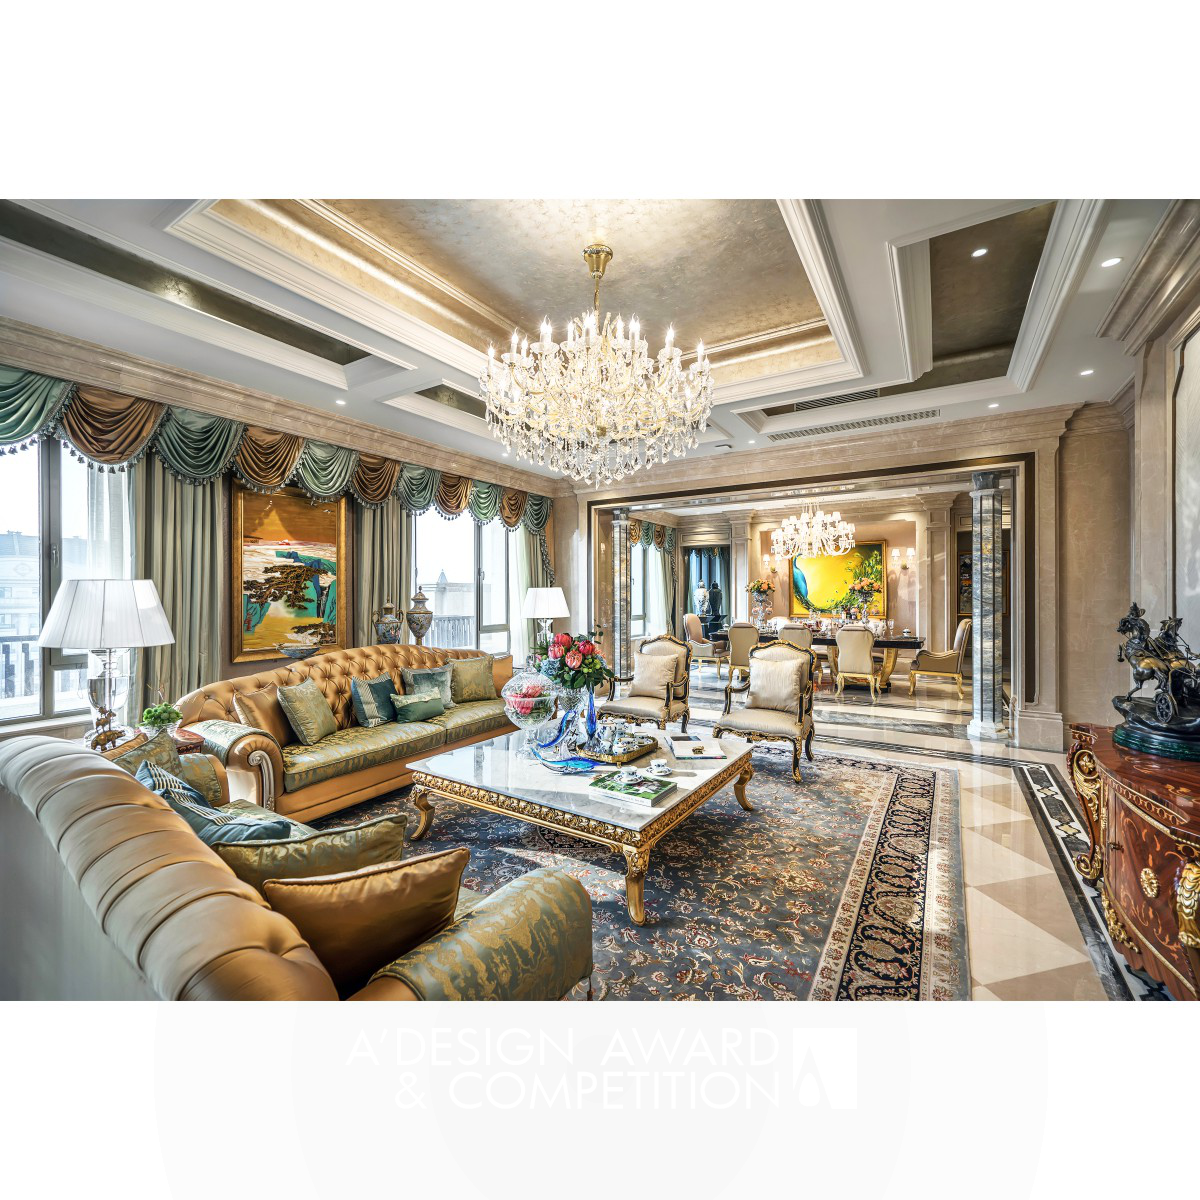 Tianrun Art Palace Penthouse Luxury Penthouse Residence by David Chang Bronze Luxury Design Award Winner 2019 